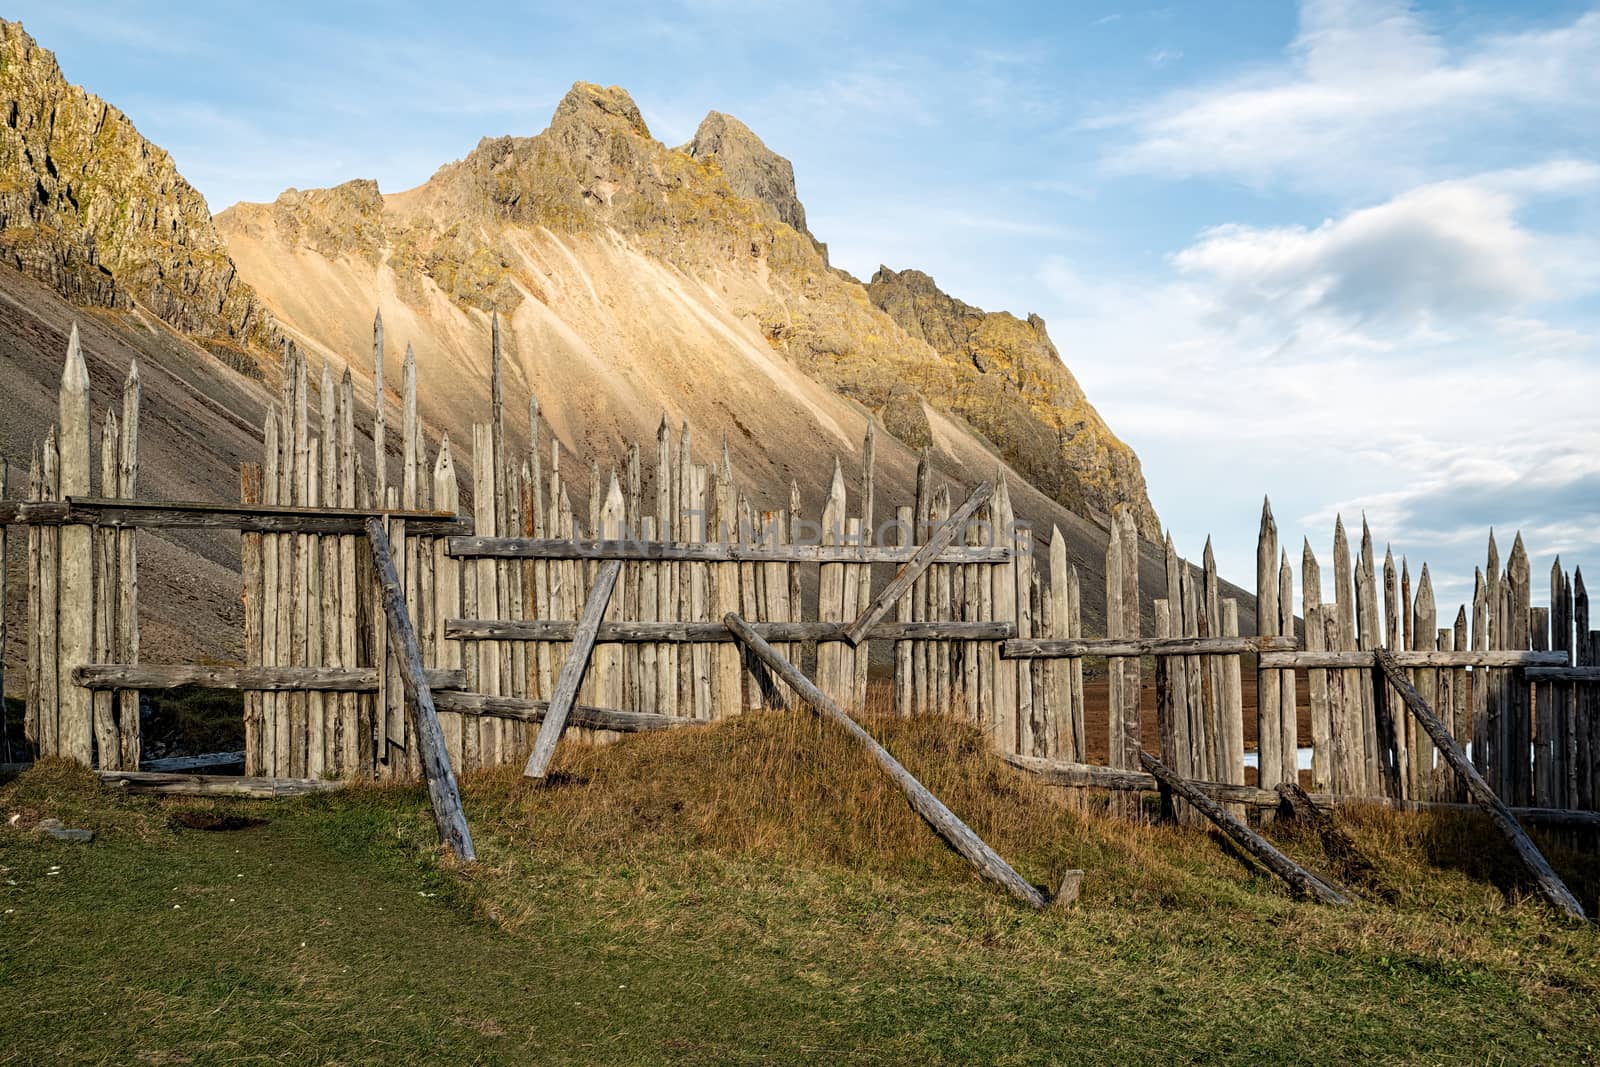 Stokksnes viking village, Iceland by LuigiMorbidelli